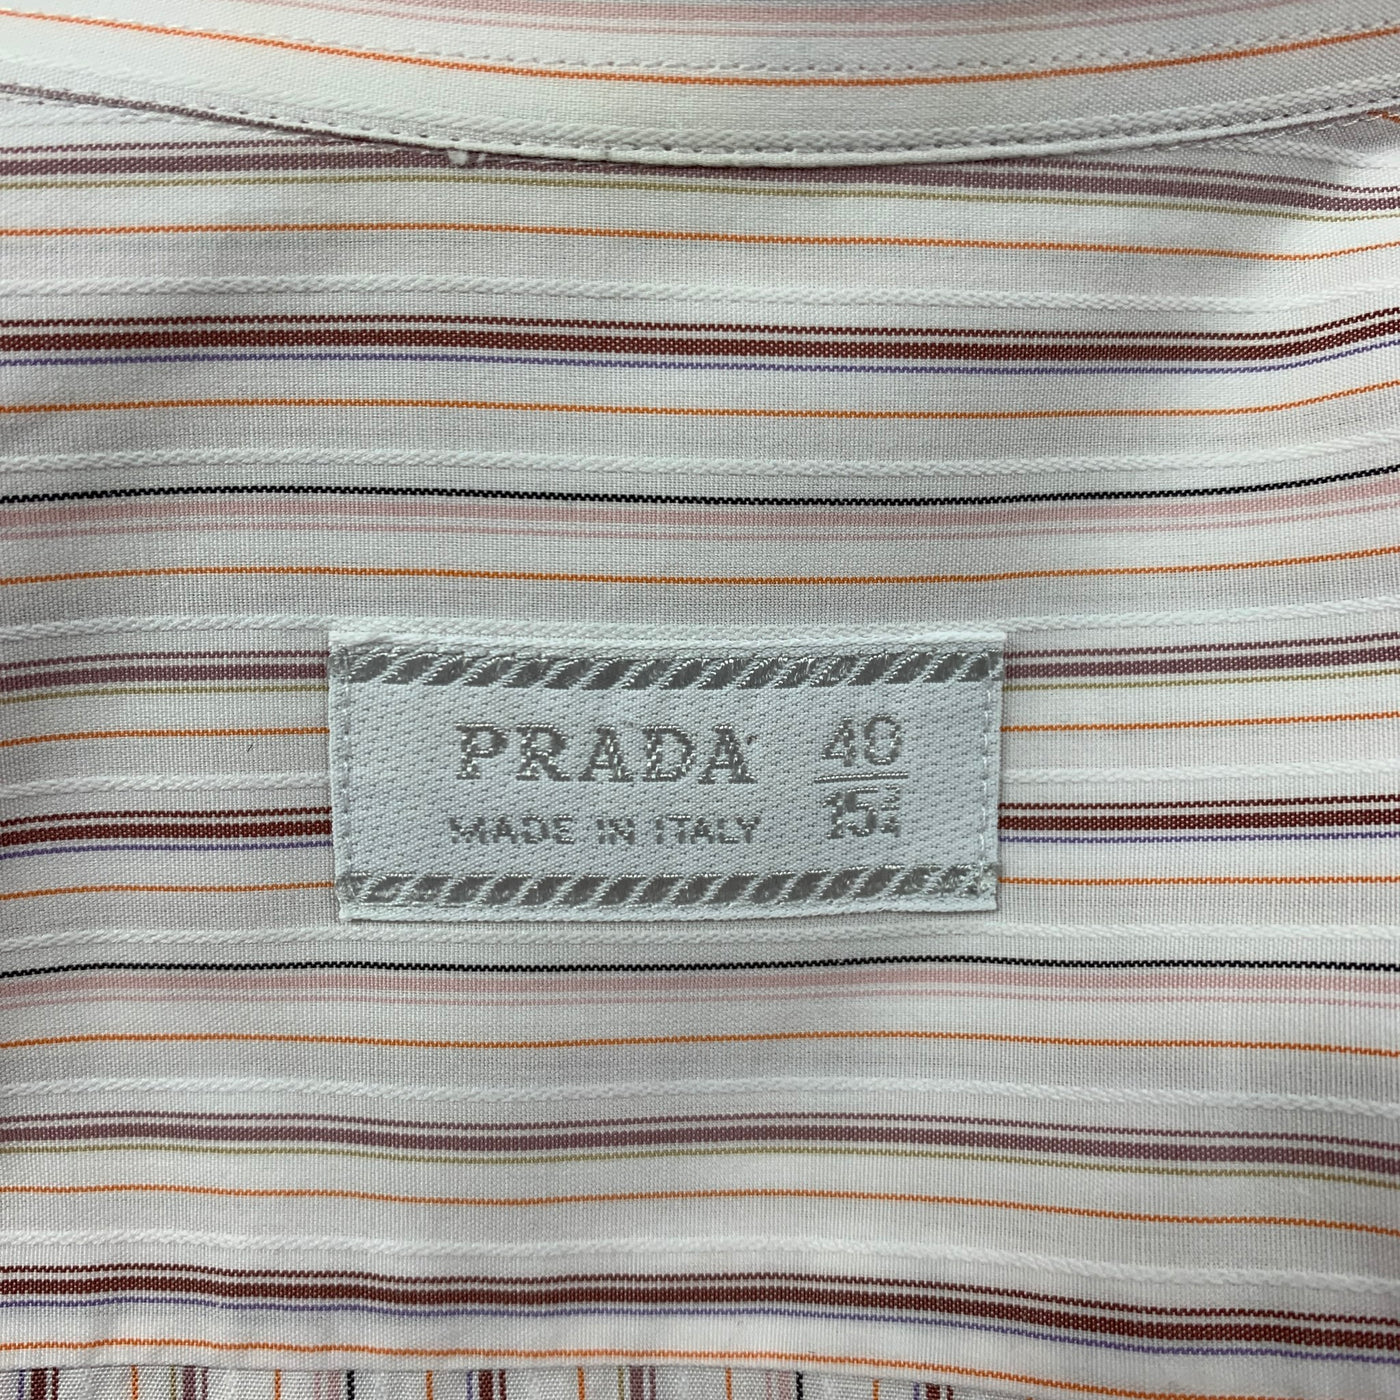 PRADA Size M White Orange Stripe Cotton Long Sleeve Shirt